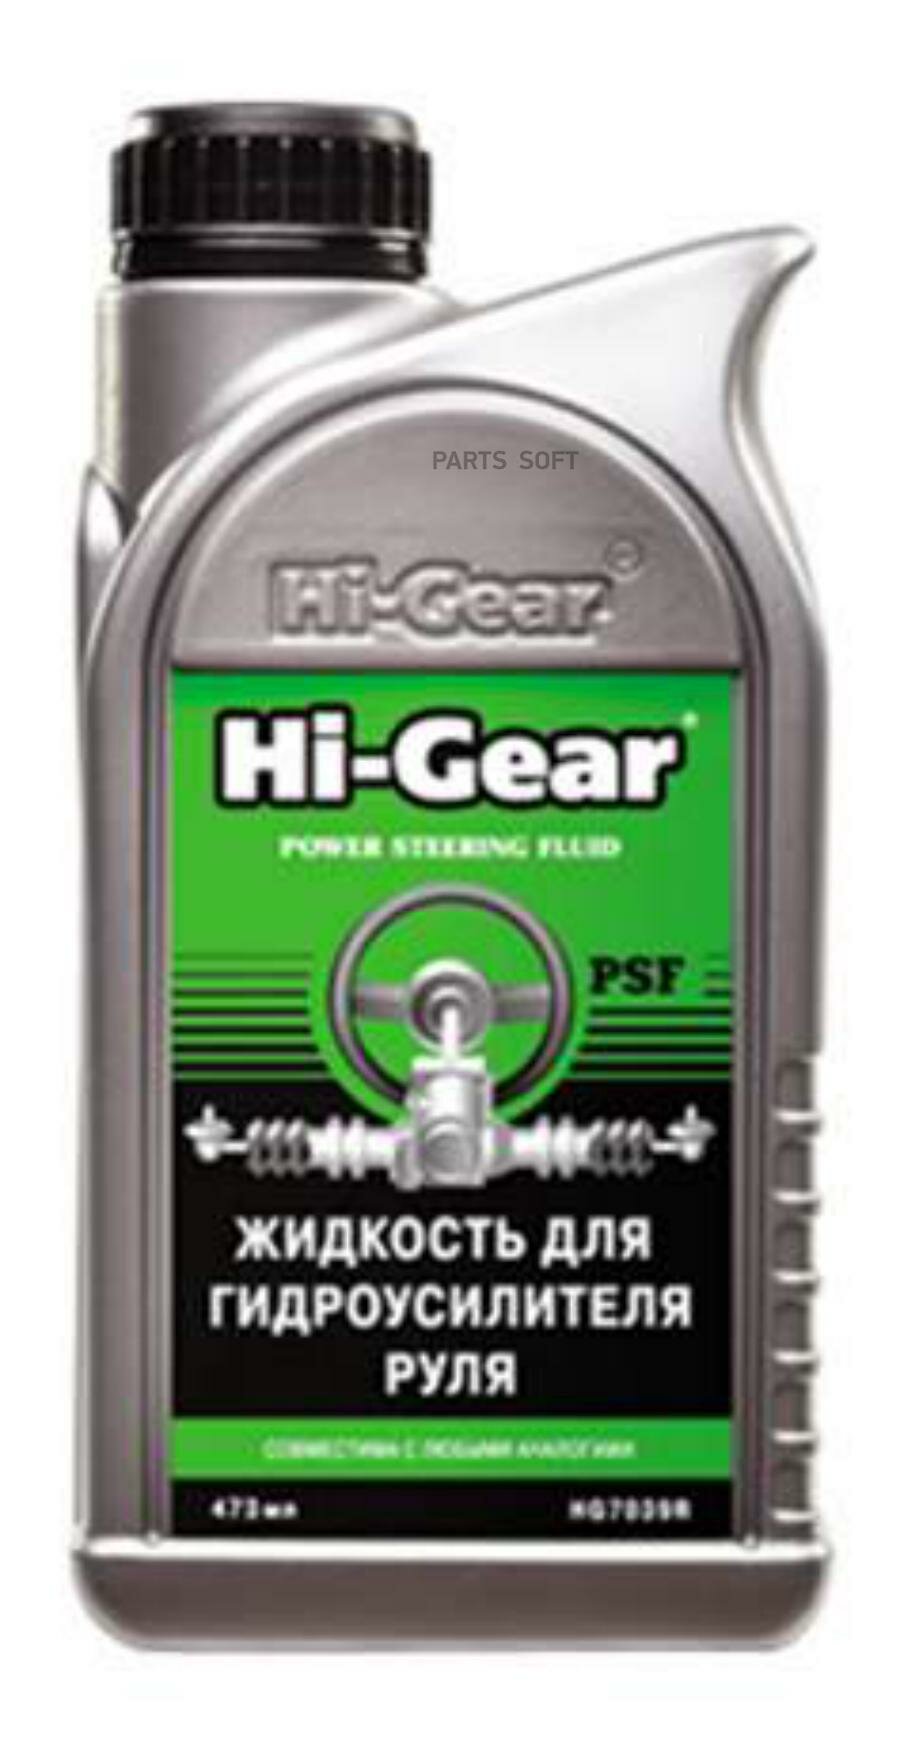 HI-GEAR HG7039R Жидкость дя гидроусиитея руя 473ml